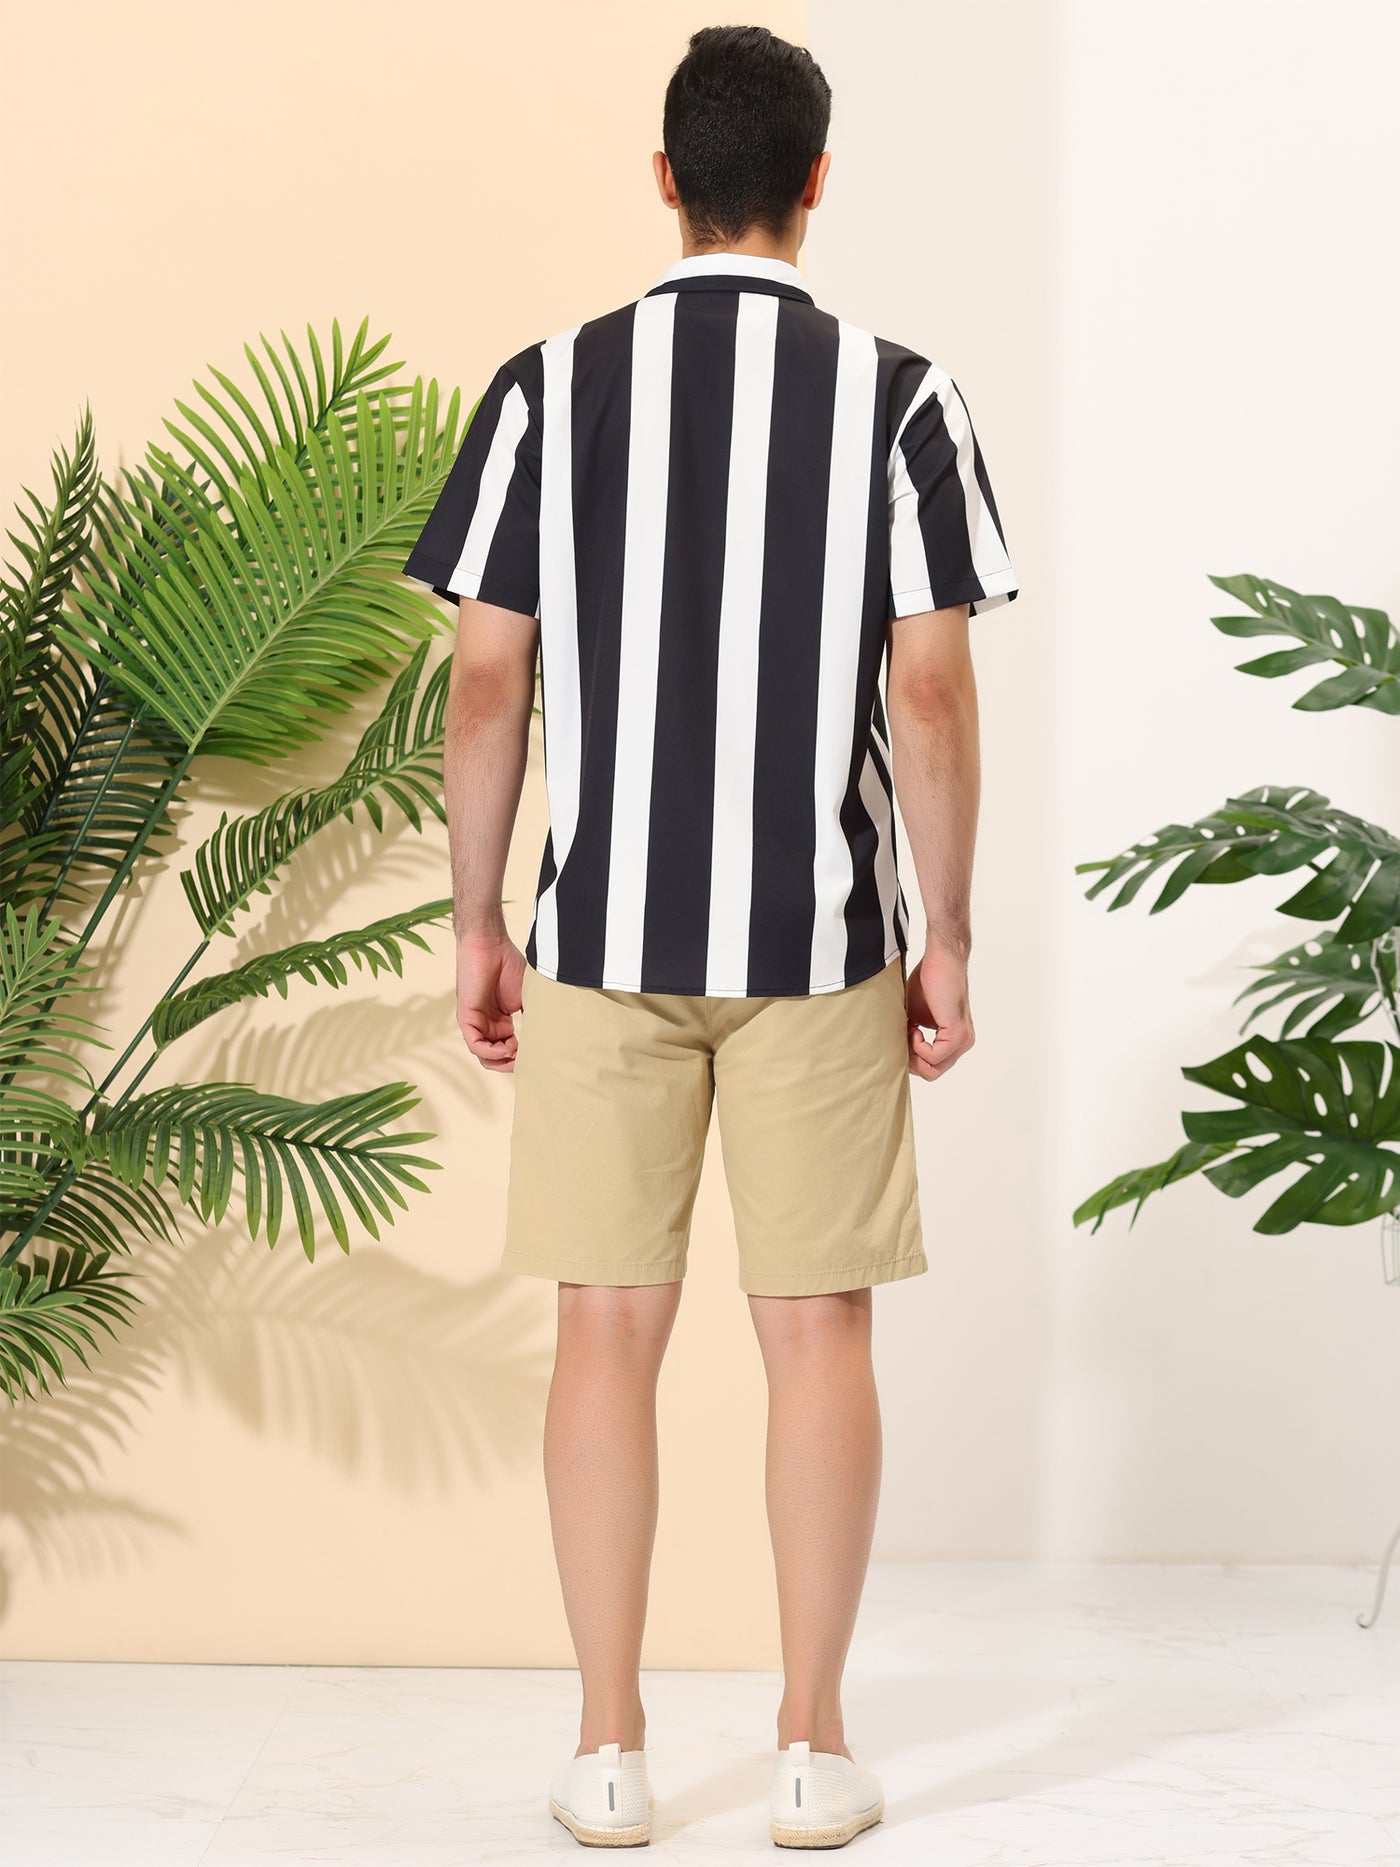 Bublédon Summer Colorful Striped Short Sleeve Button Shirt